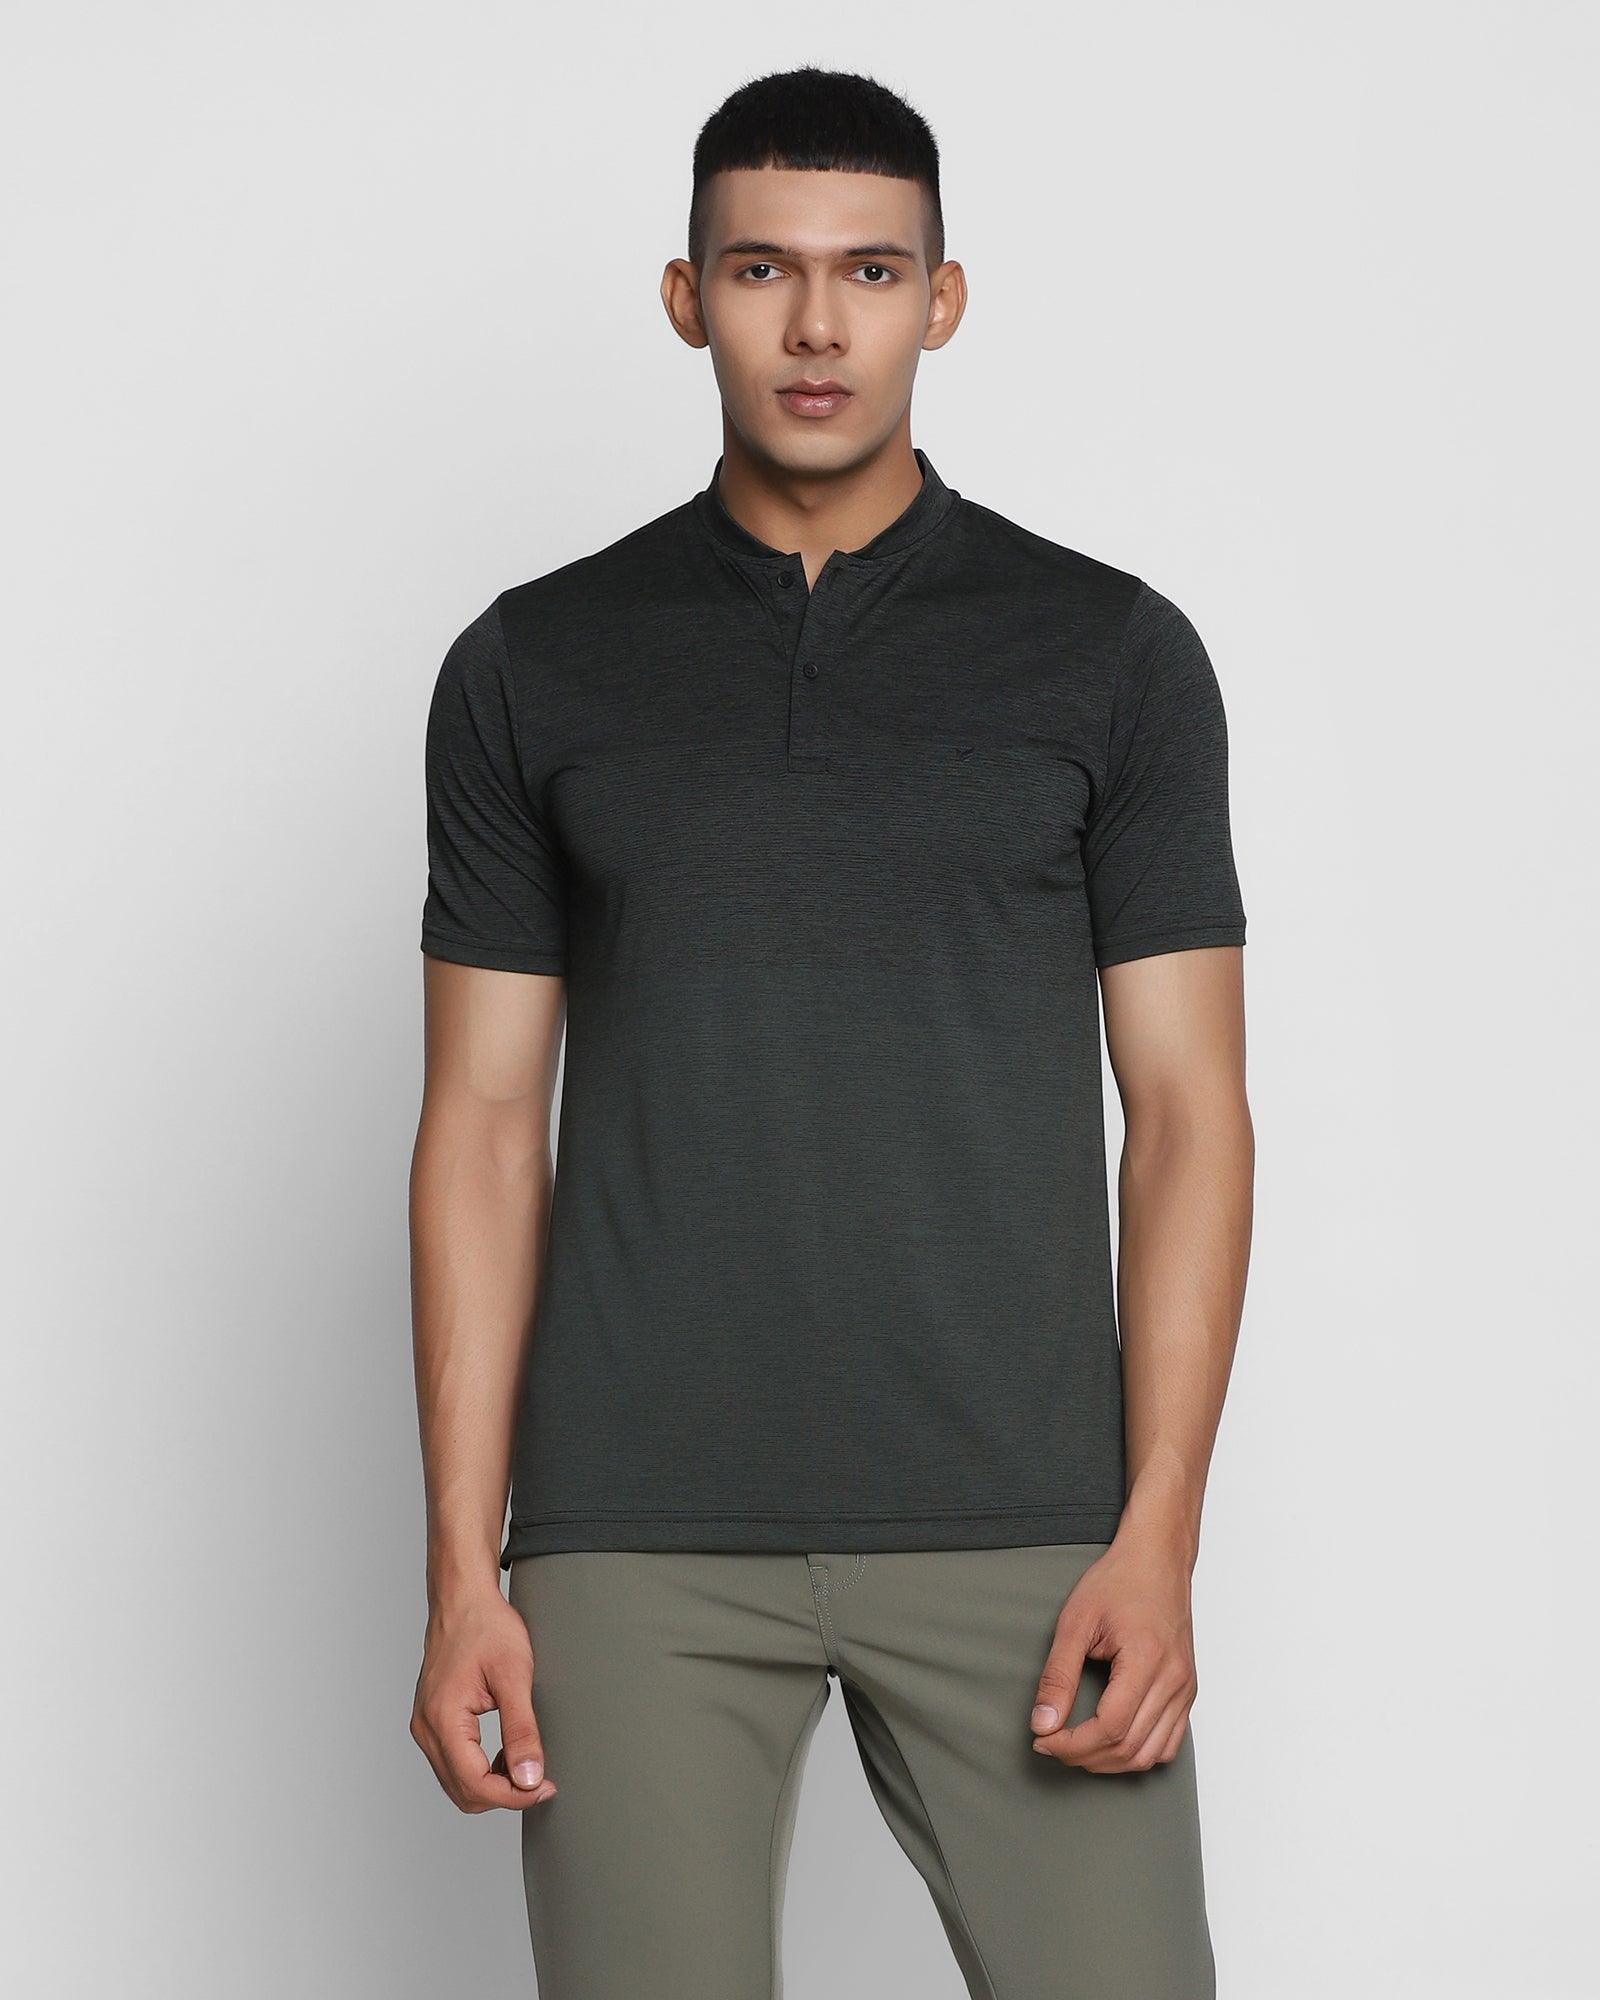 TechPro Mandarin Collar Olive Solid T Shirt - Sport